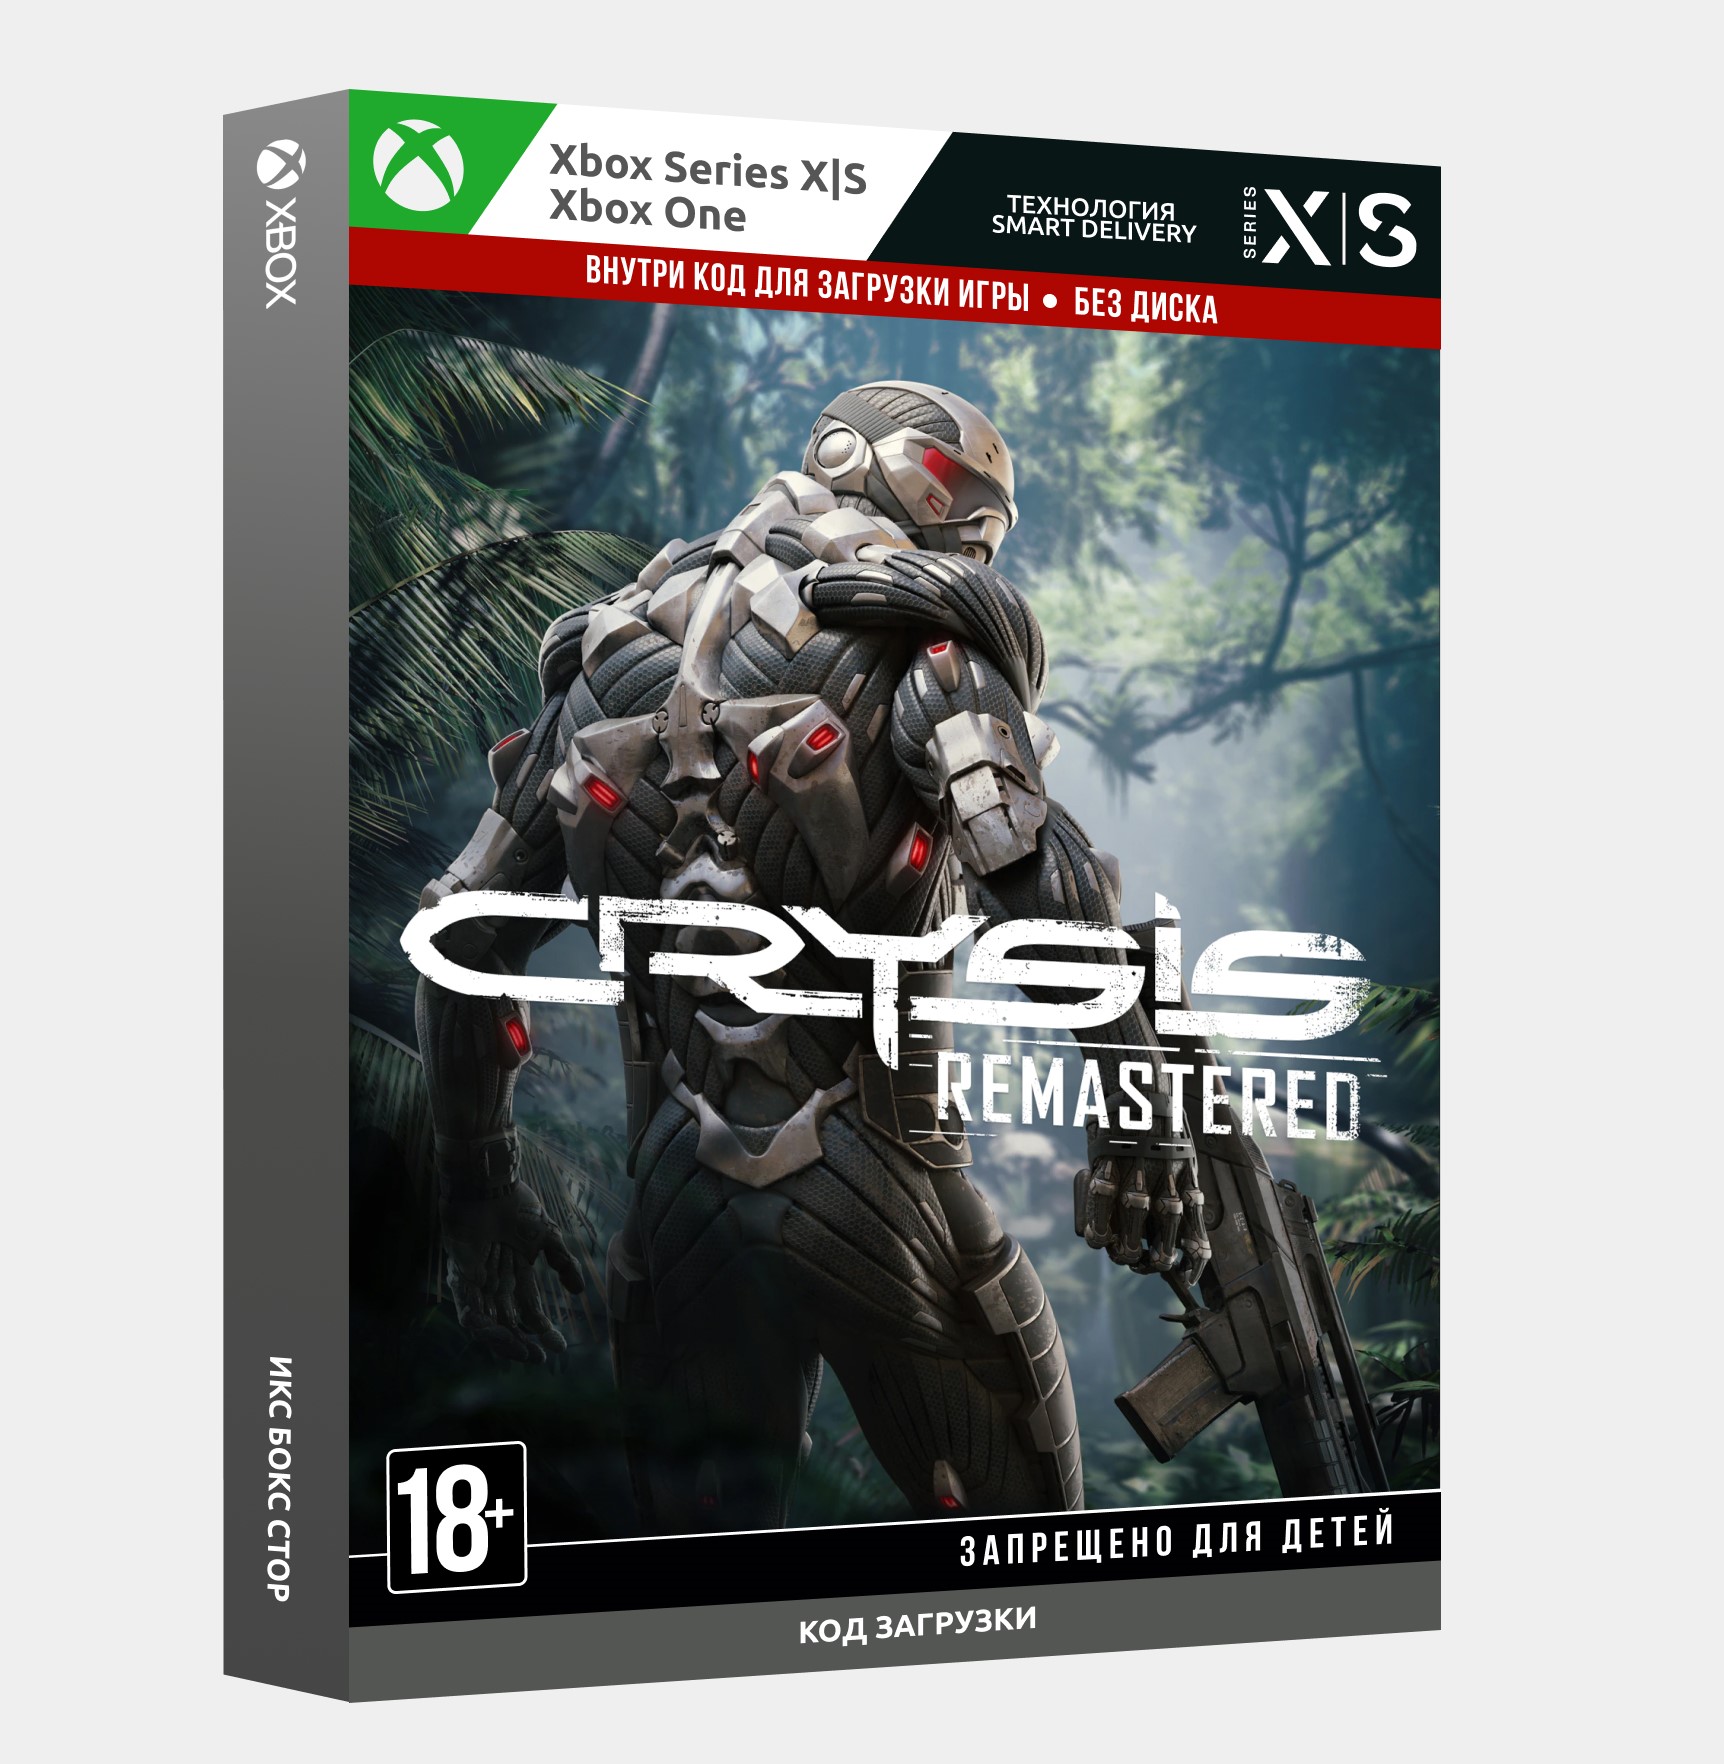 Crysis ключи. Crysis Remastered. Crysis Remastered Xbox. Крайзис 1 ремастер на Икс бокс Ван. Crysis Remastered отличия от оригинала.